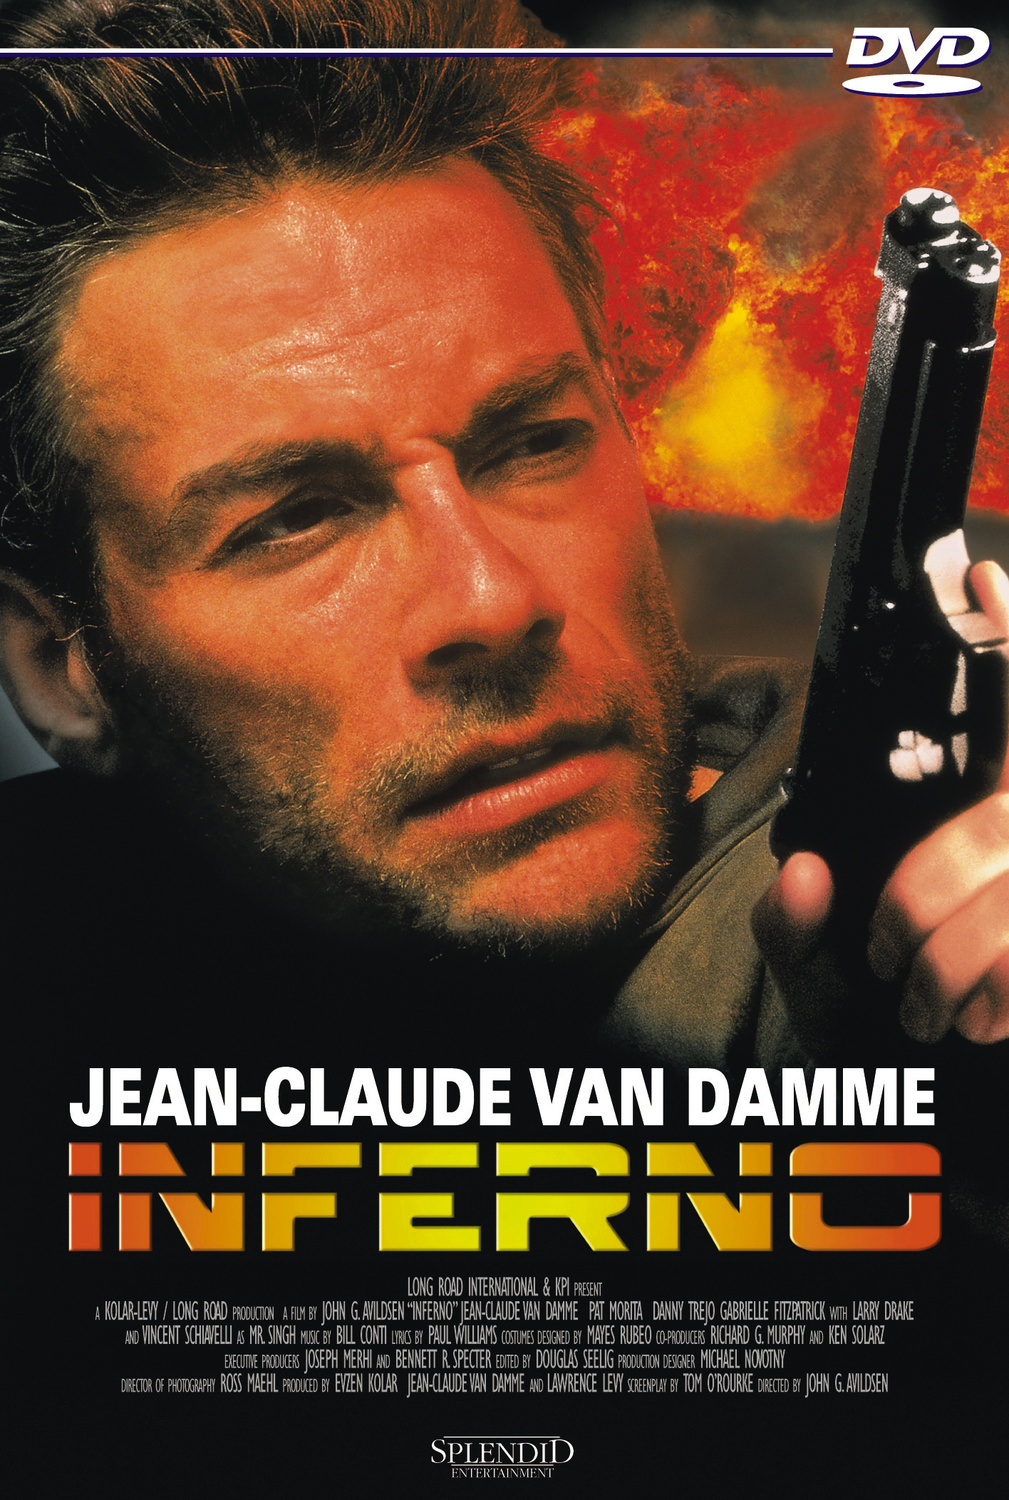 Movie Online 2016 Inferno Watch Full-Length